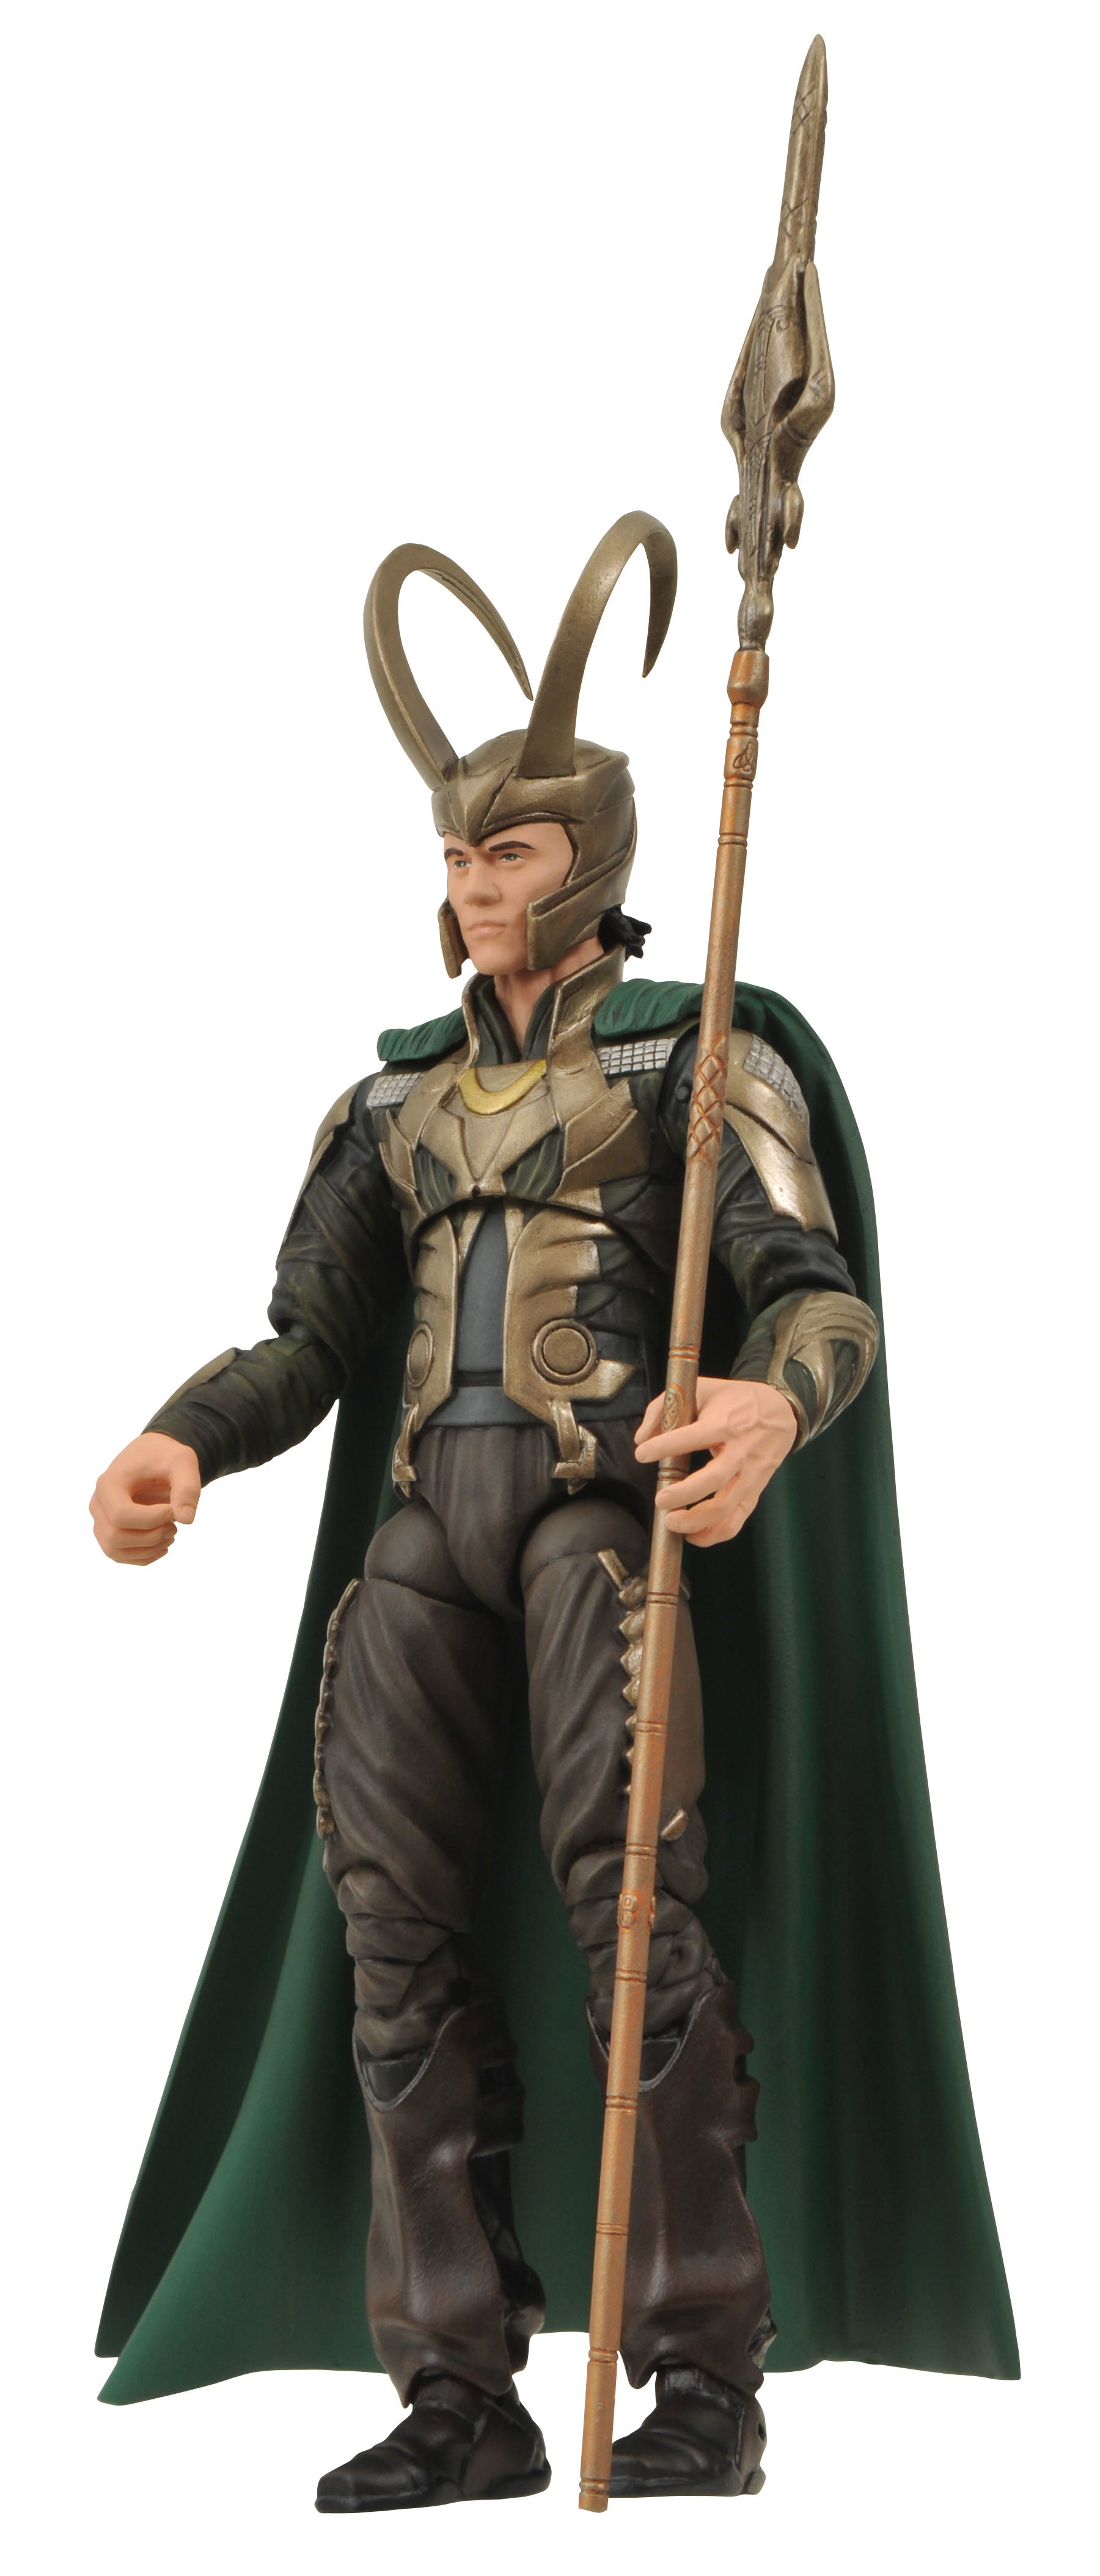 Marvel Select Thor Movie Loki Action Figure by Diamond Select Toys – Alter  Ego Comics